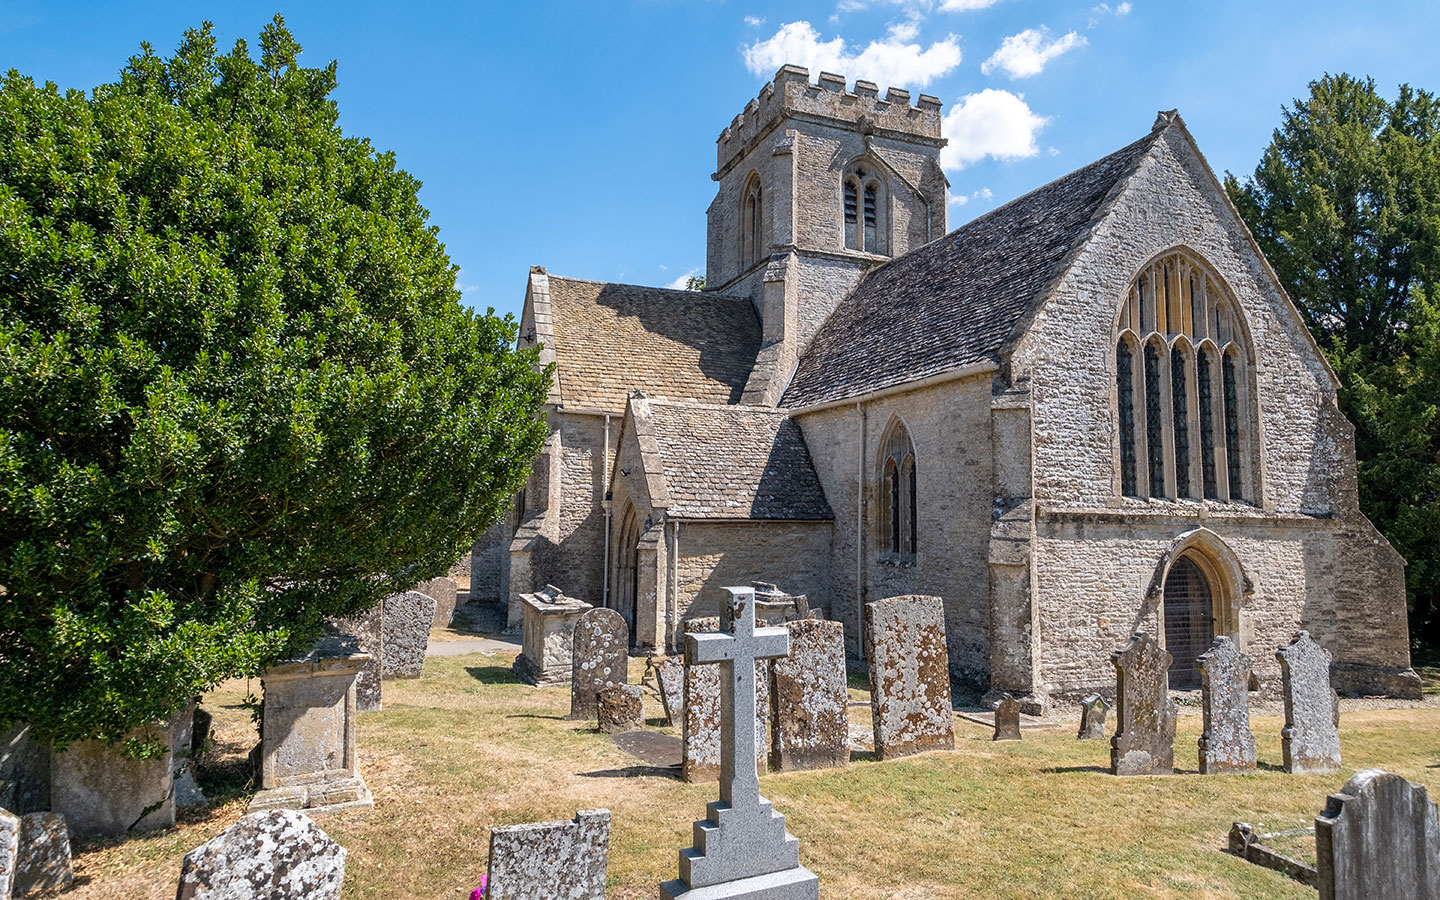 St Kenelm's Church in Minster Lovell, Oxfordshire